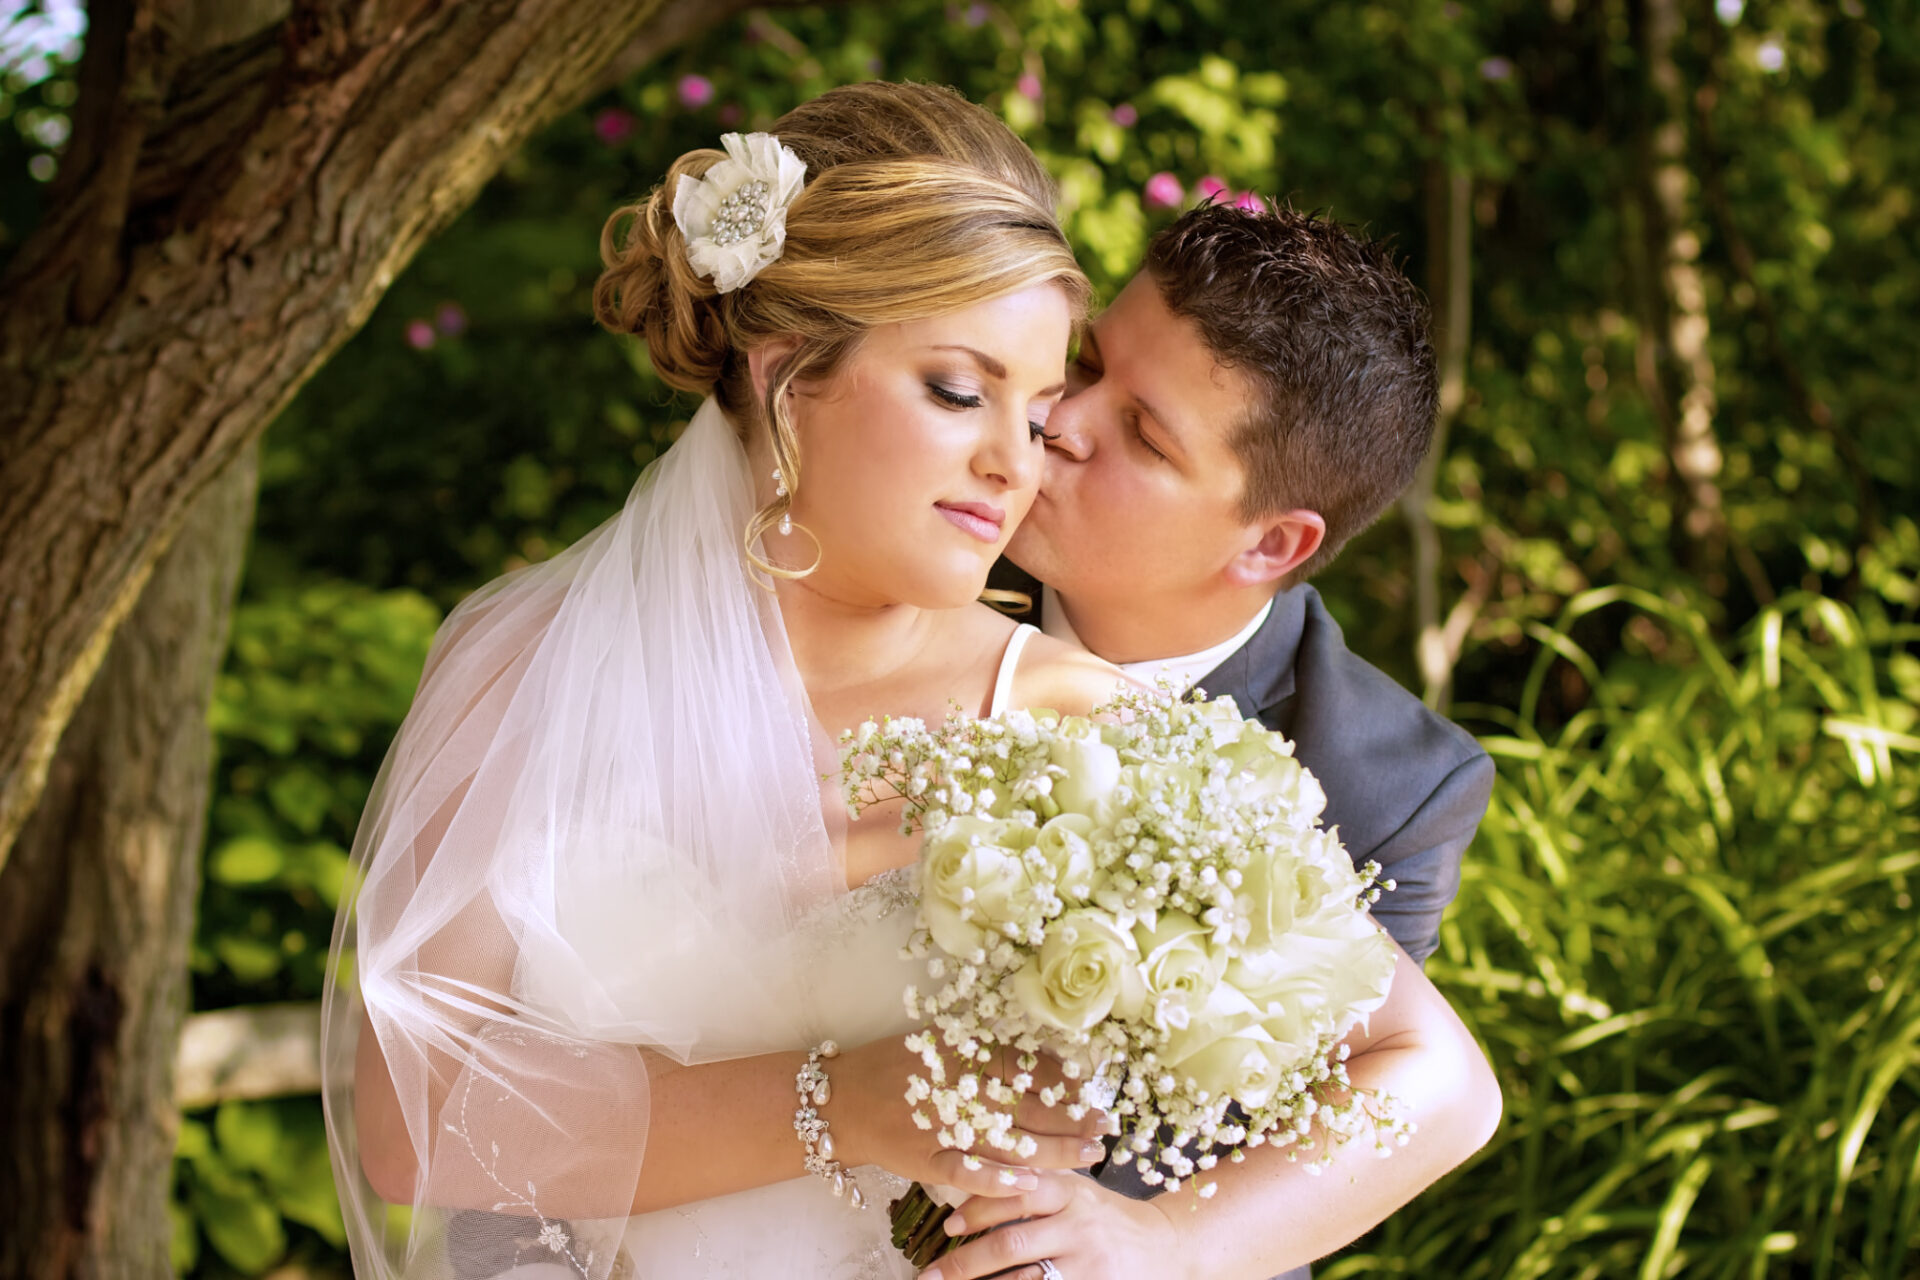 Pittsburgh bride and groom share a kiss near a garden